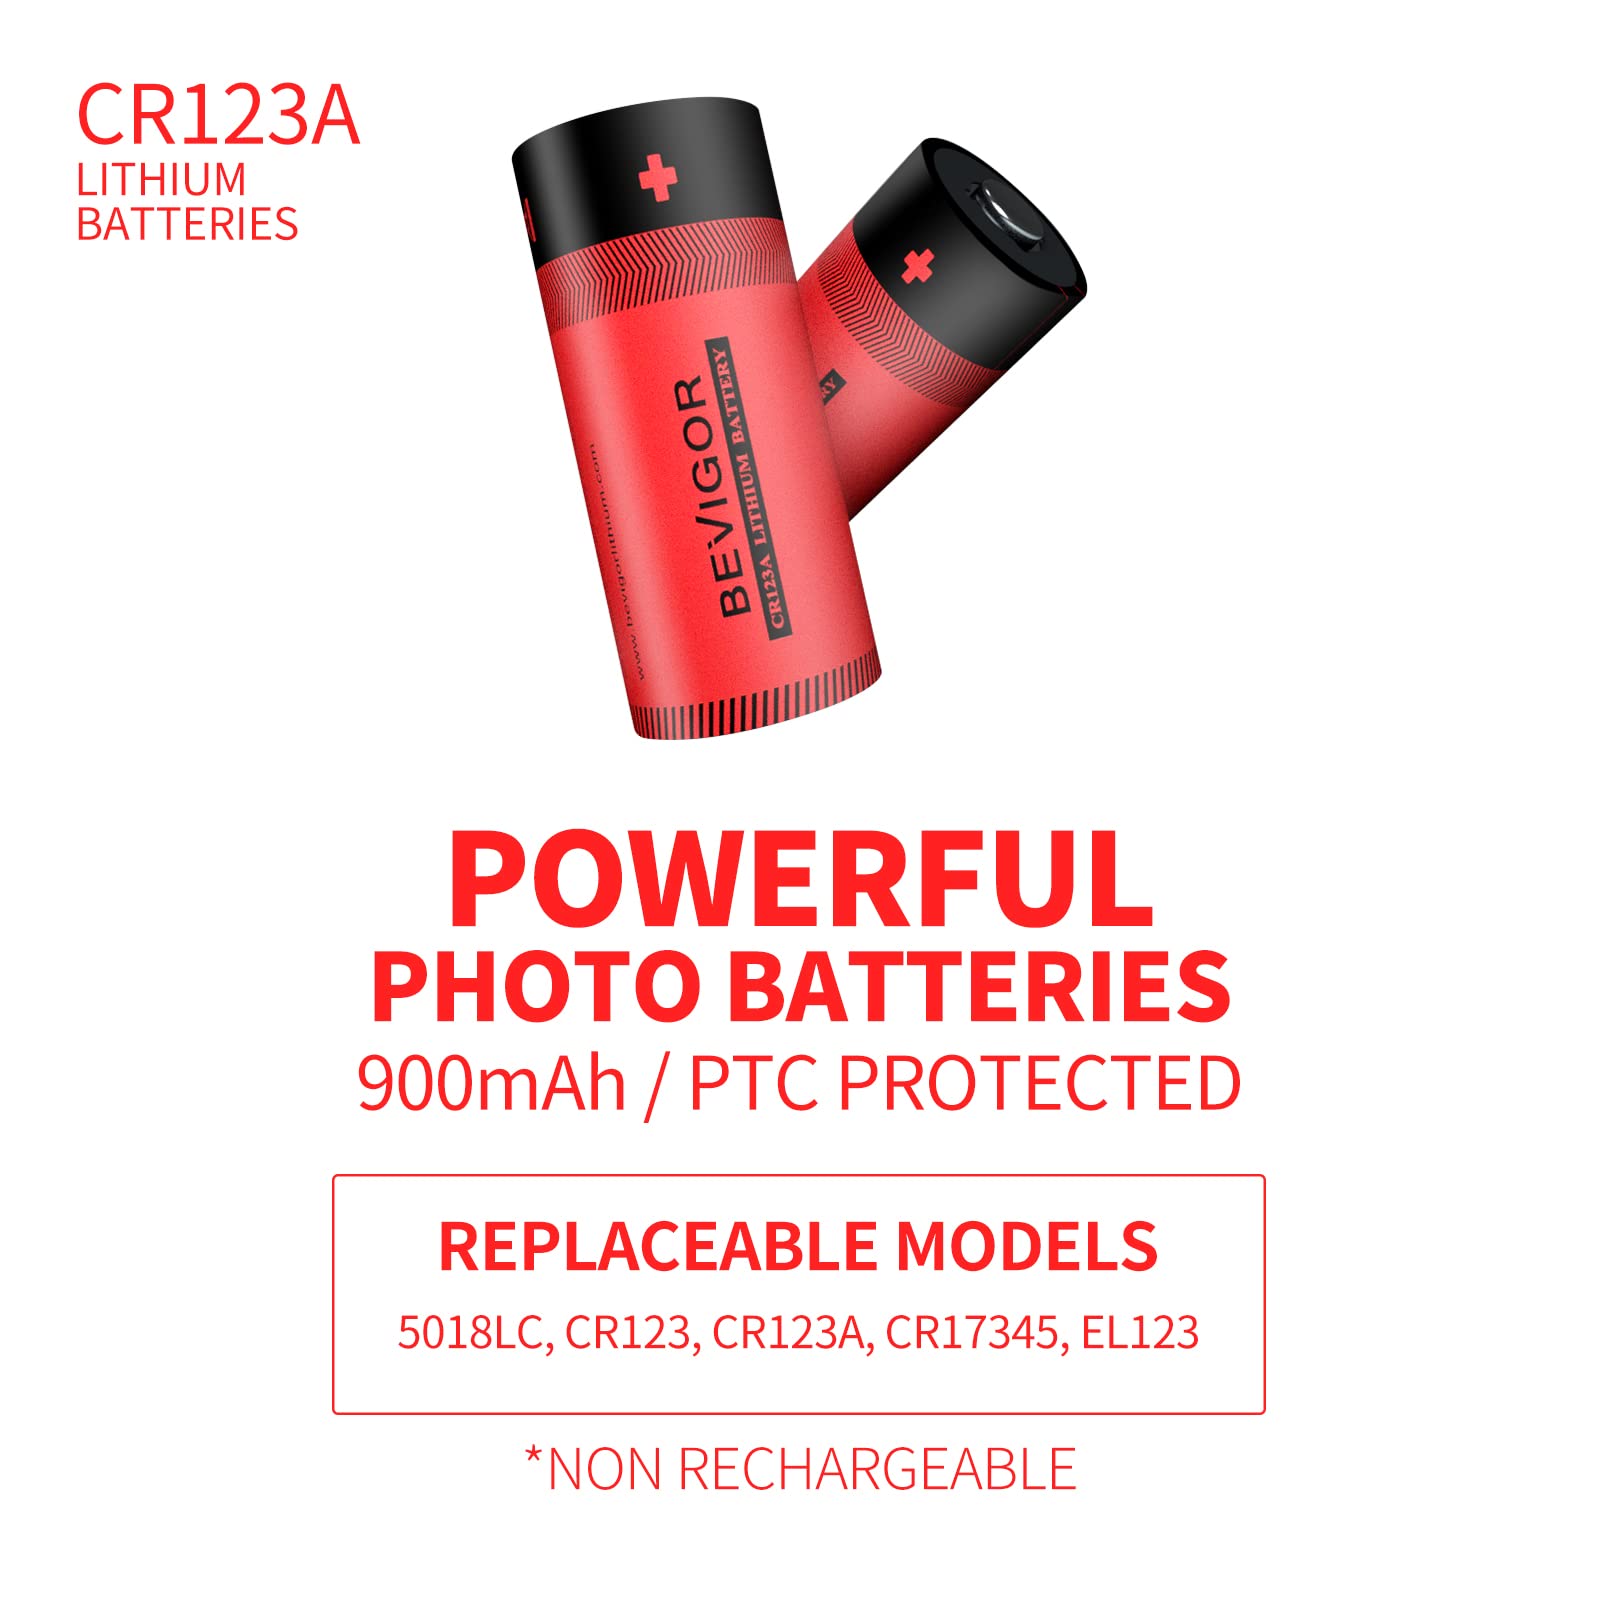 CR123 lithium batteries